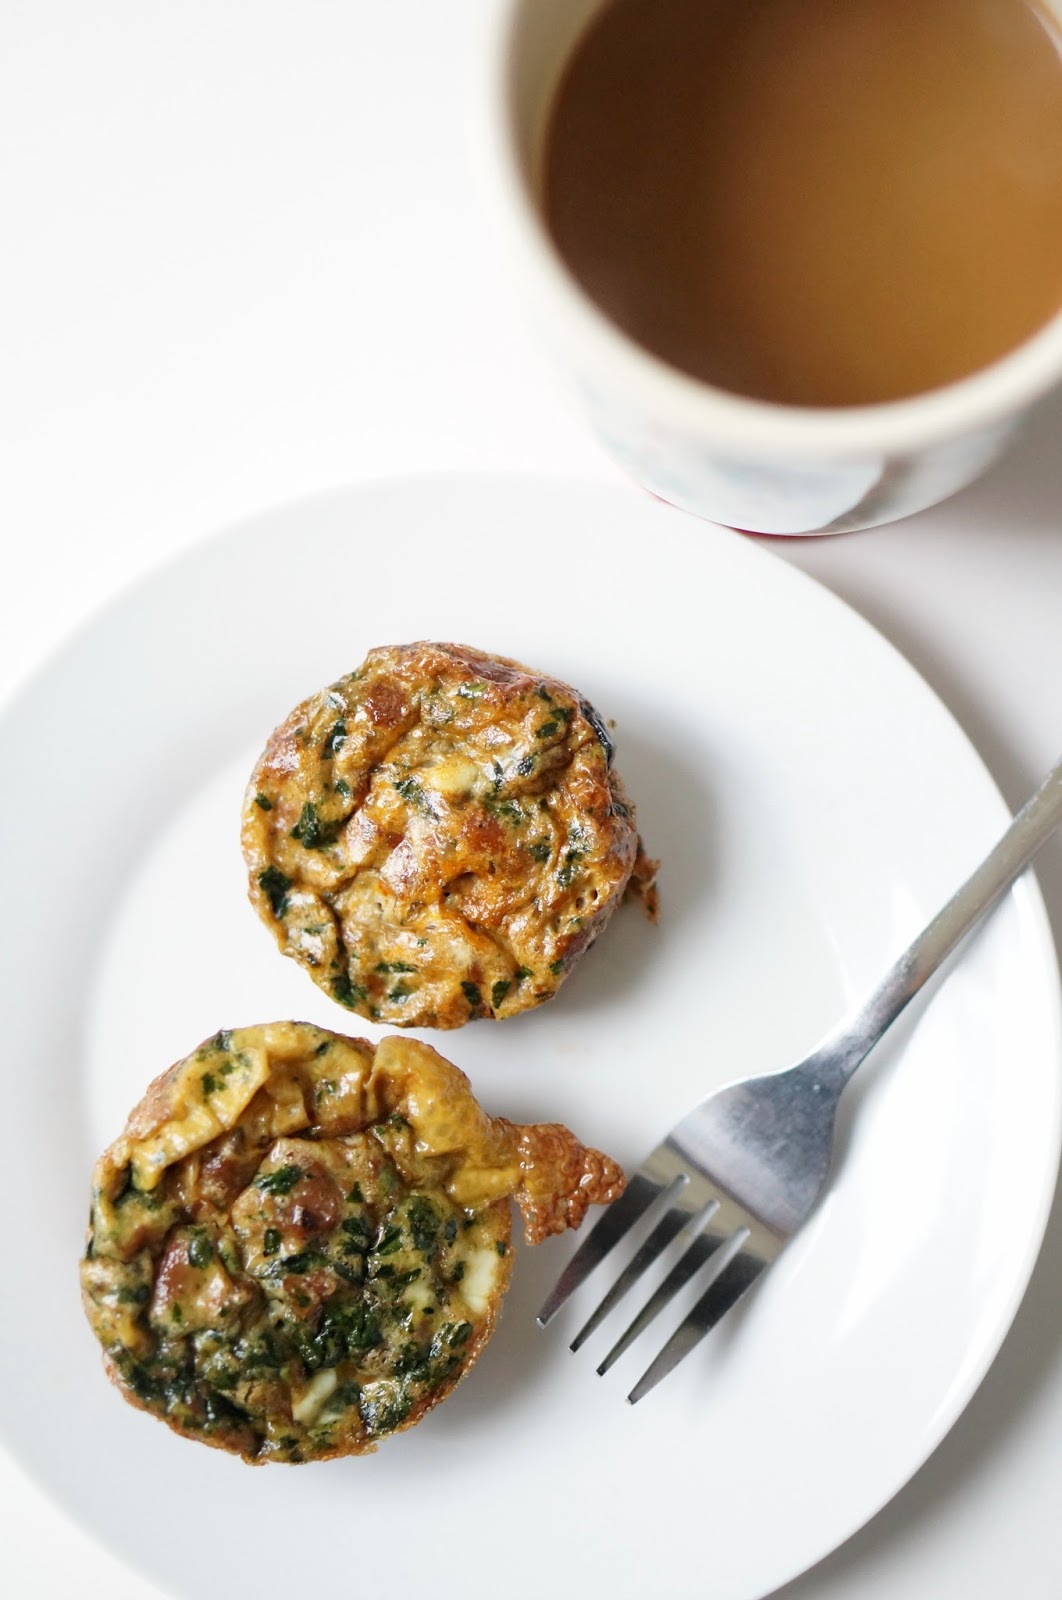 Rebecca Lately MorningStar Farms Veggie Crumbles Breakfast Egg Muffins